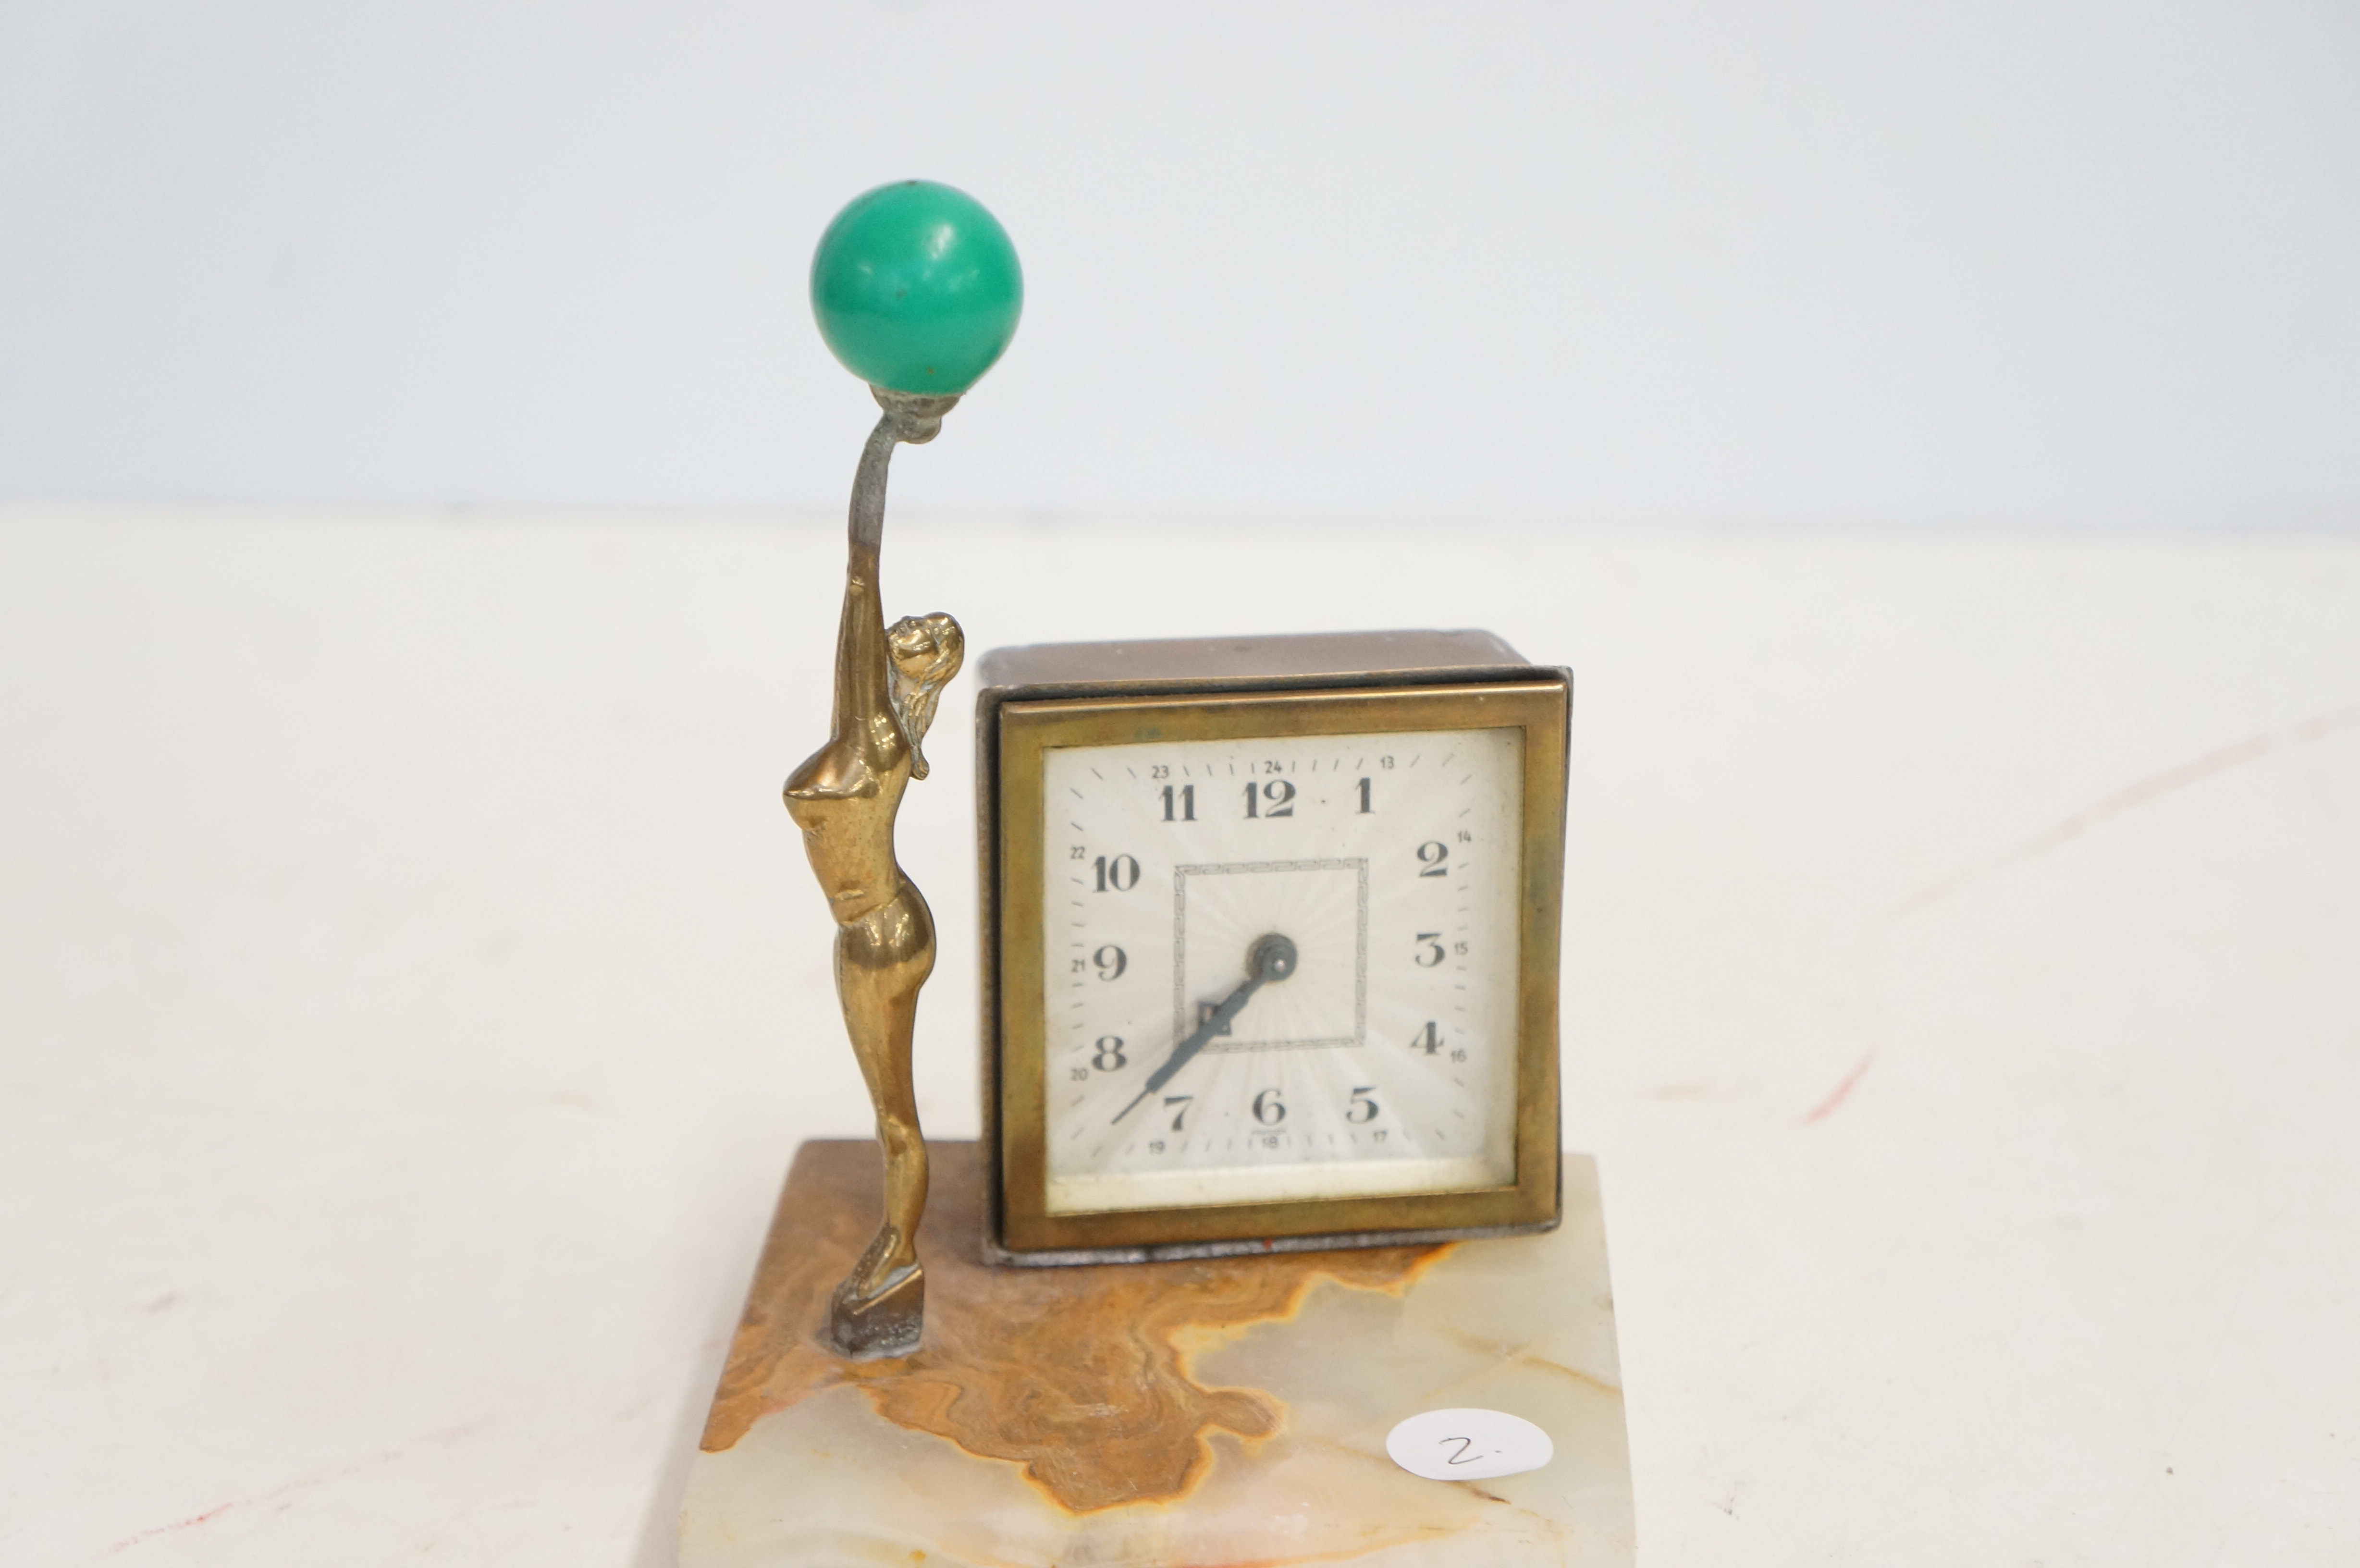 Art deco mantle clock